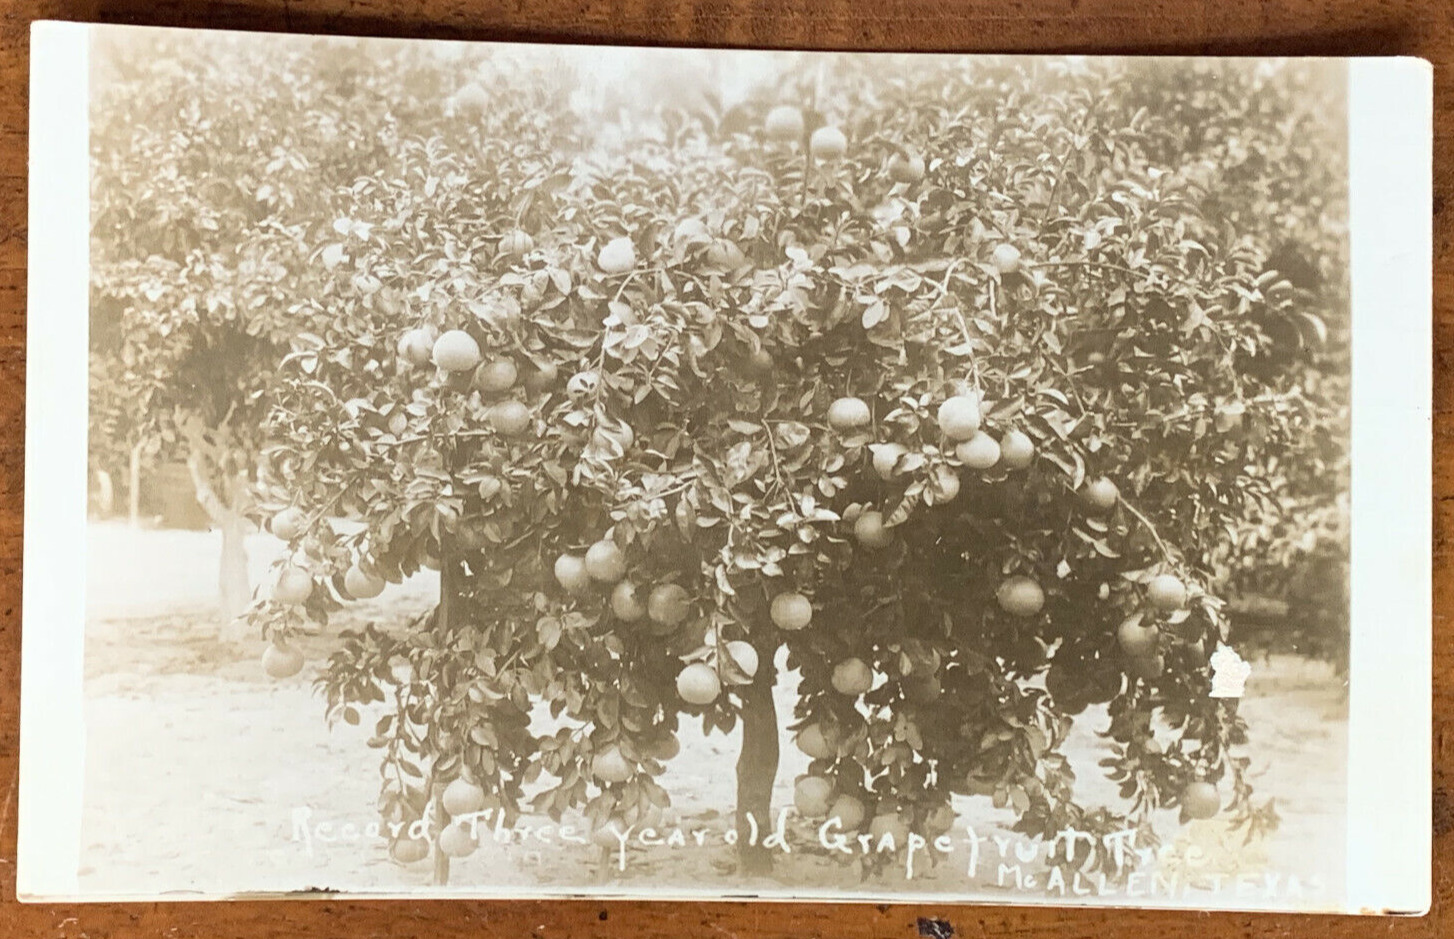 Texas TX, McAllen RPPC, Record 3 Year Old Grapefruit Tree, 1910 Photo Postcard